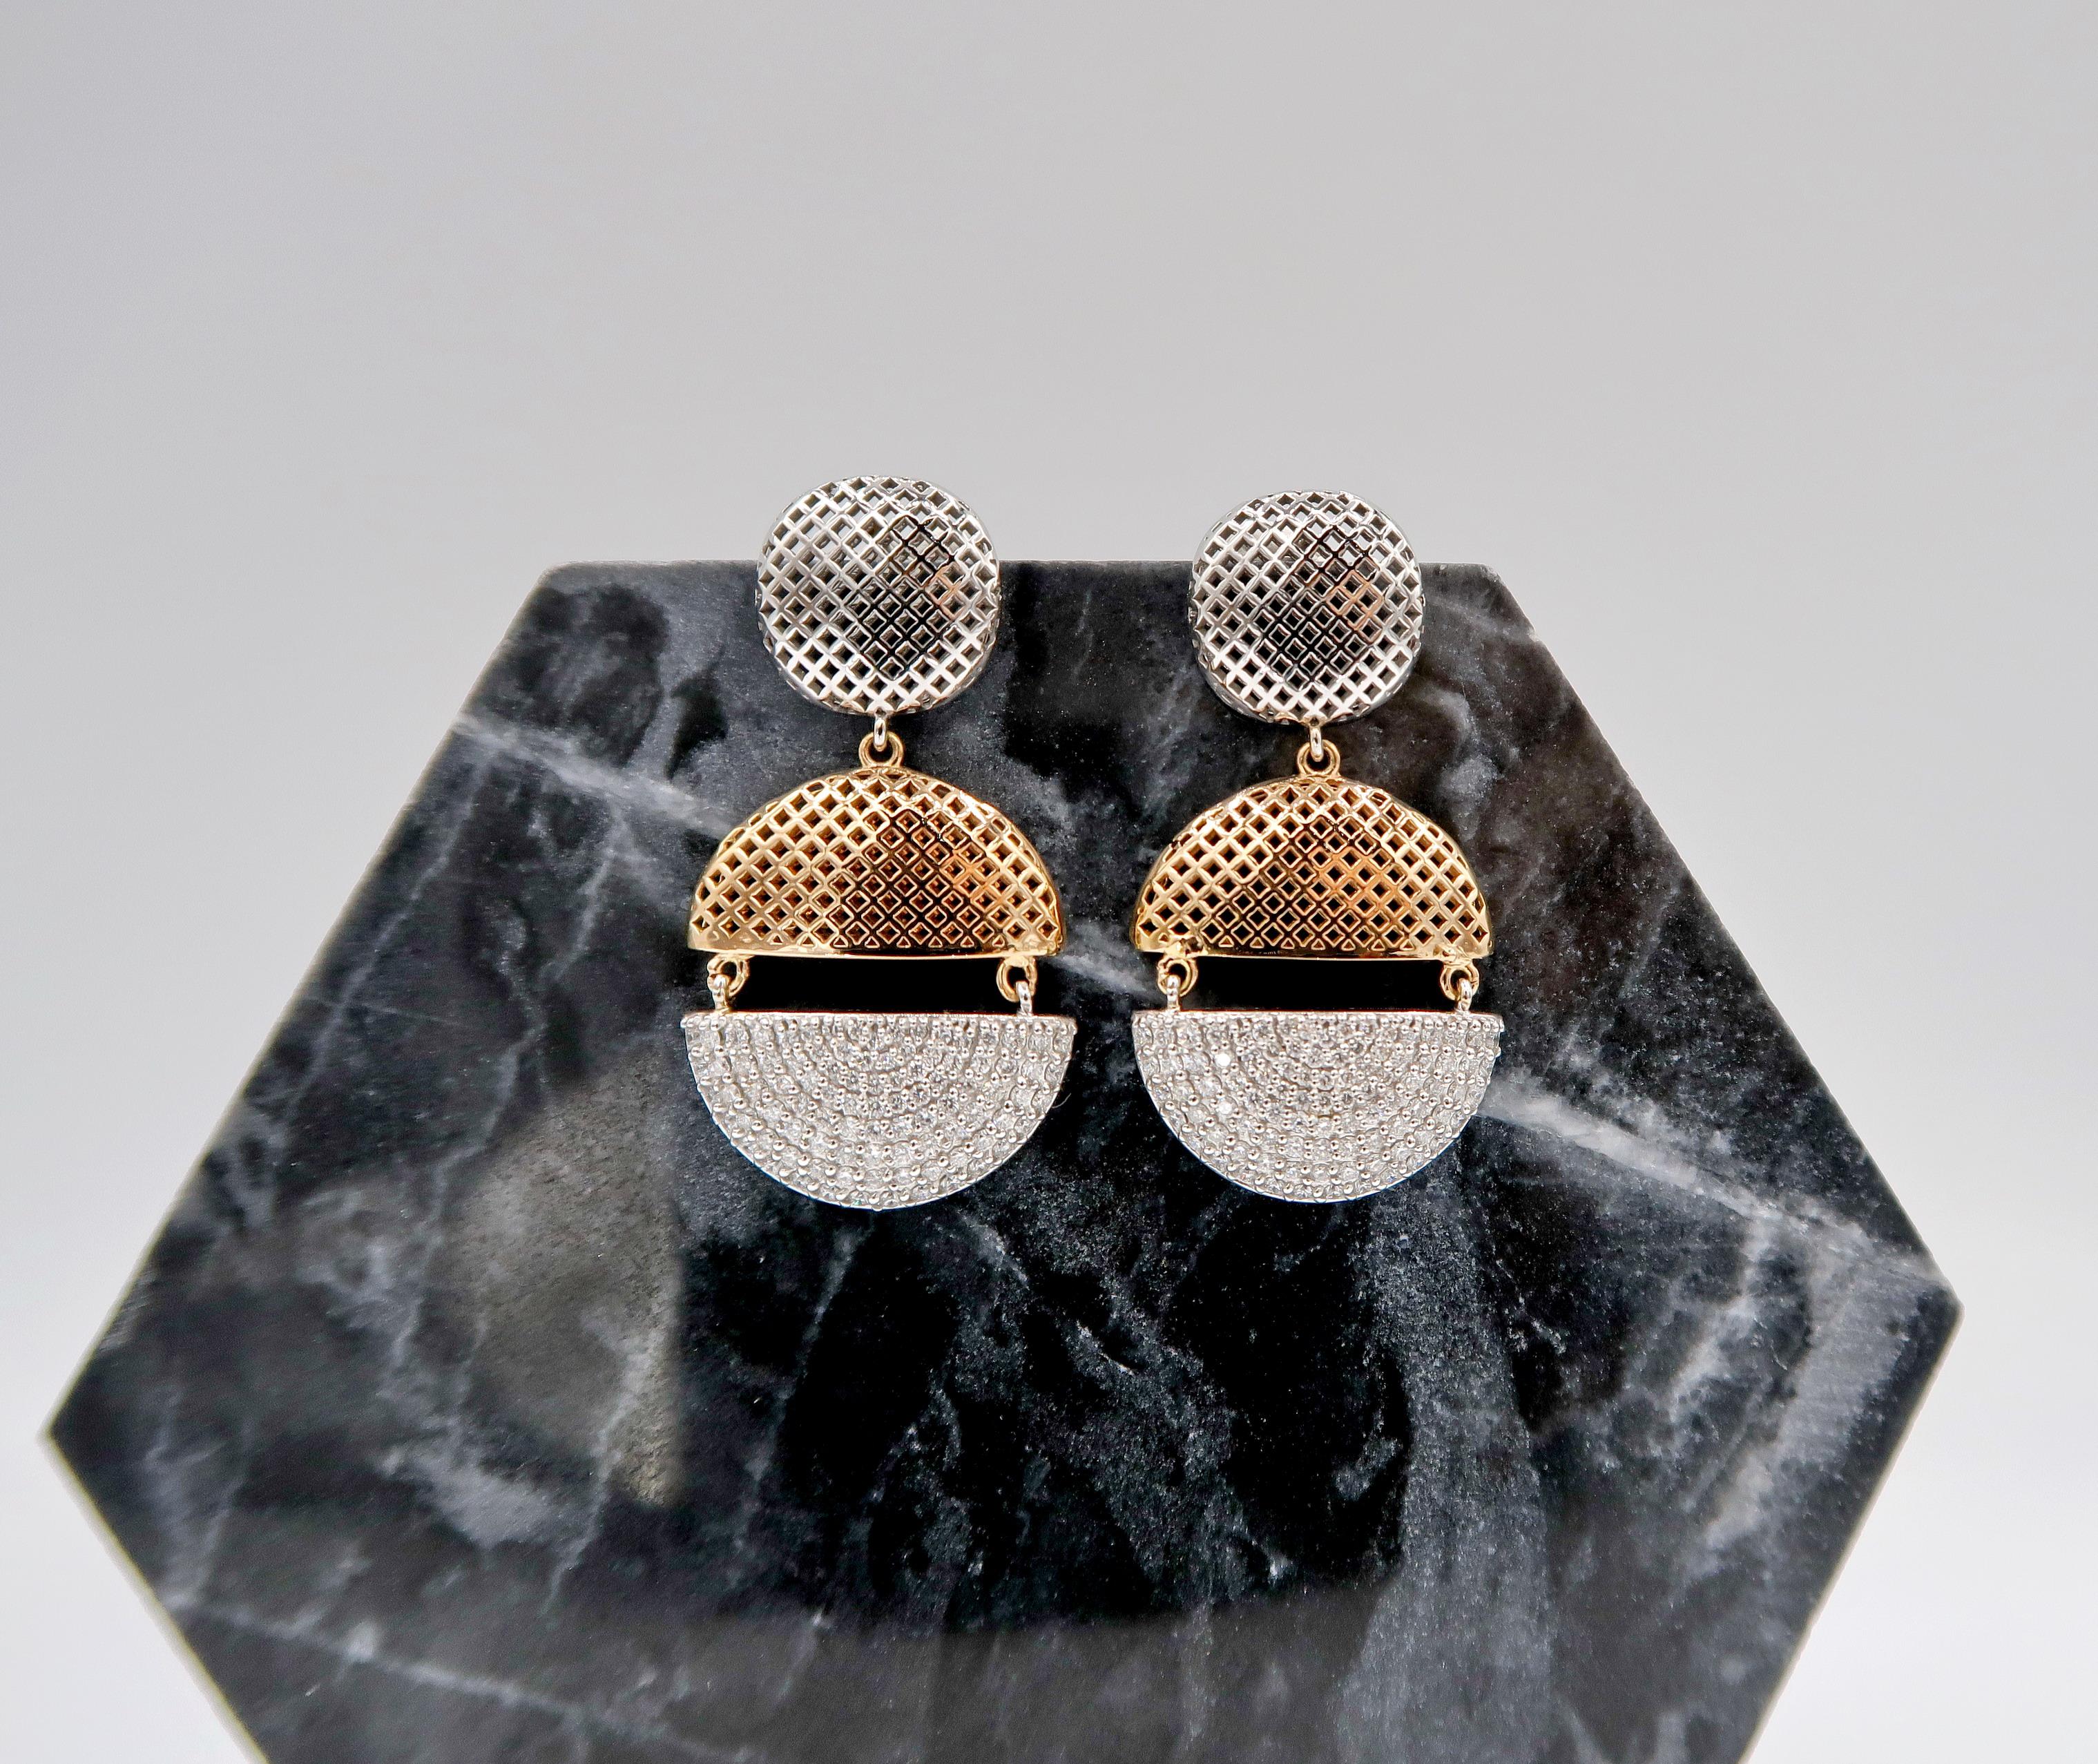 Perforated Dangling Geometric Circle / Semicircle Pavé Diamond Earrings in 18K White & Rose Gold

Gold: 18K White & Rose Gold, 10.314 g
Diamond: 1.20 ct